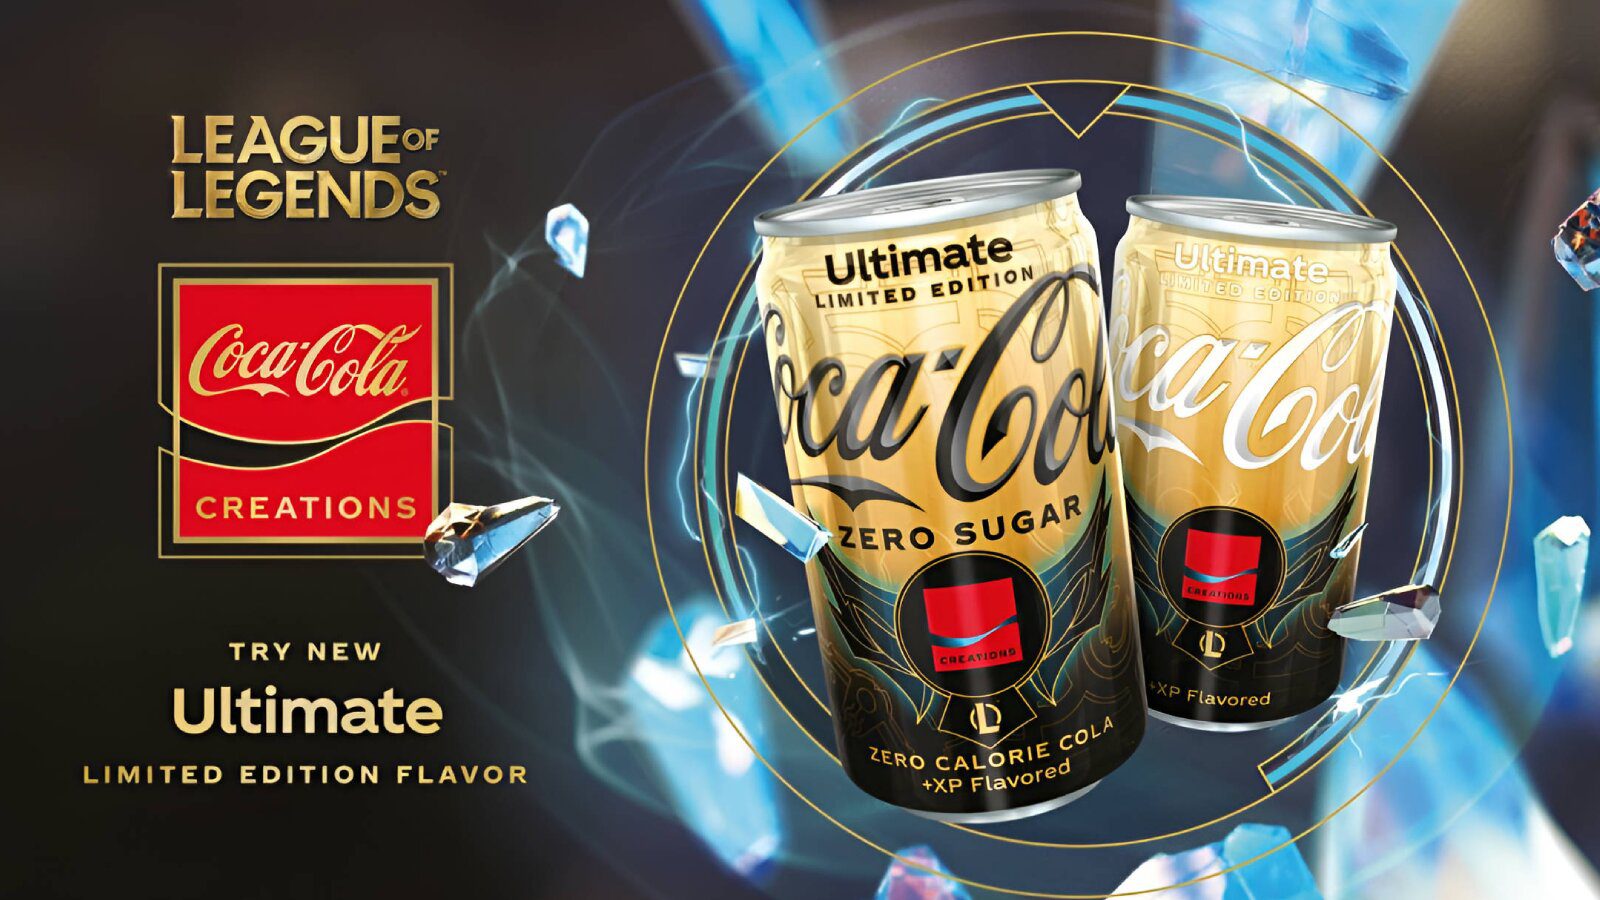 Coca-Cola и League Of Legends представляют Ultimate Zero Sugar